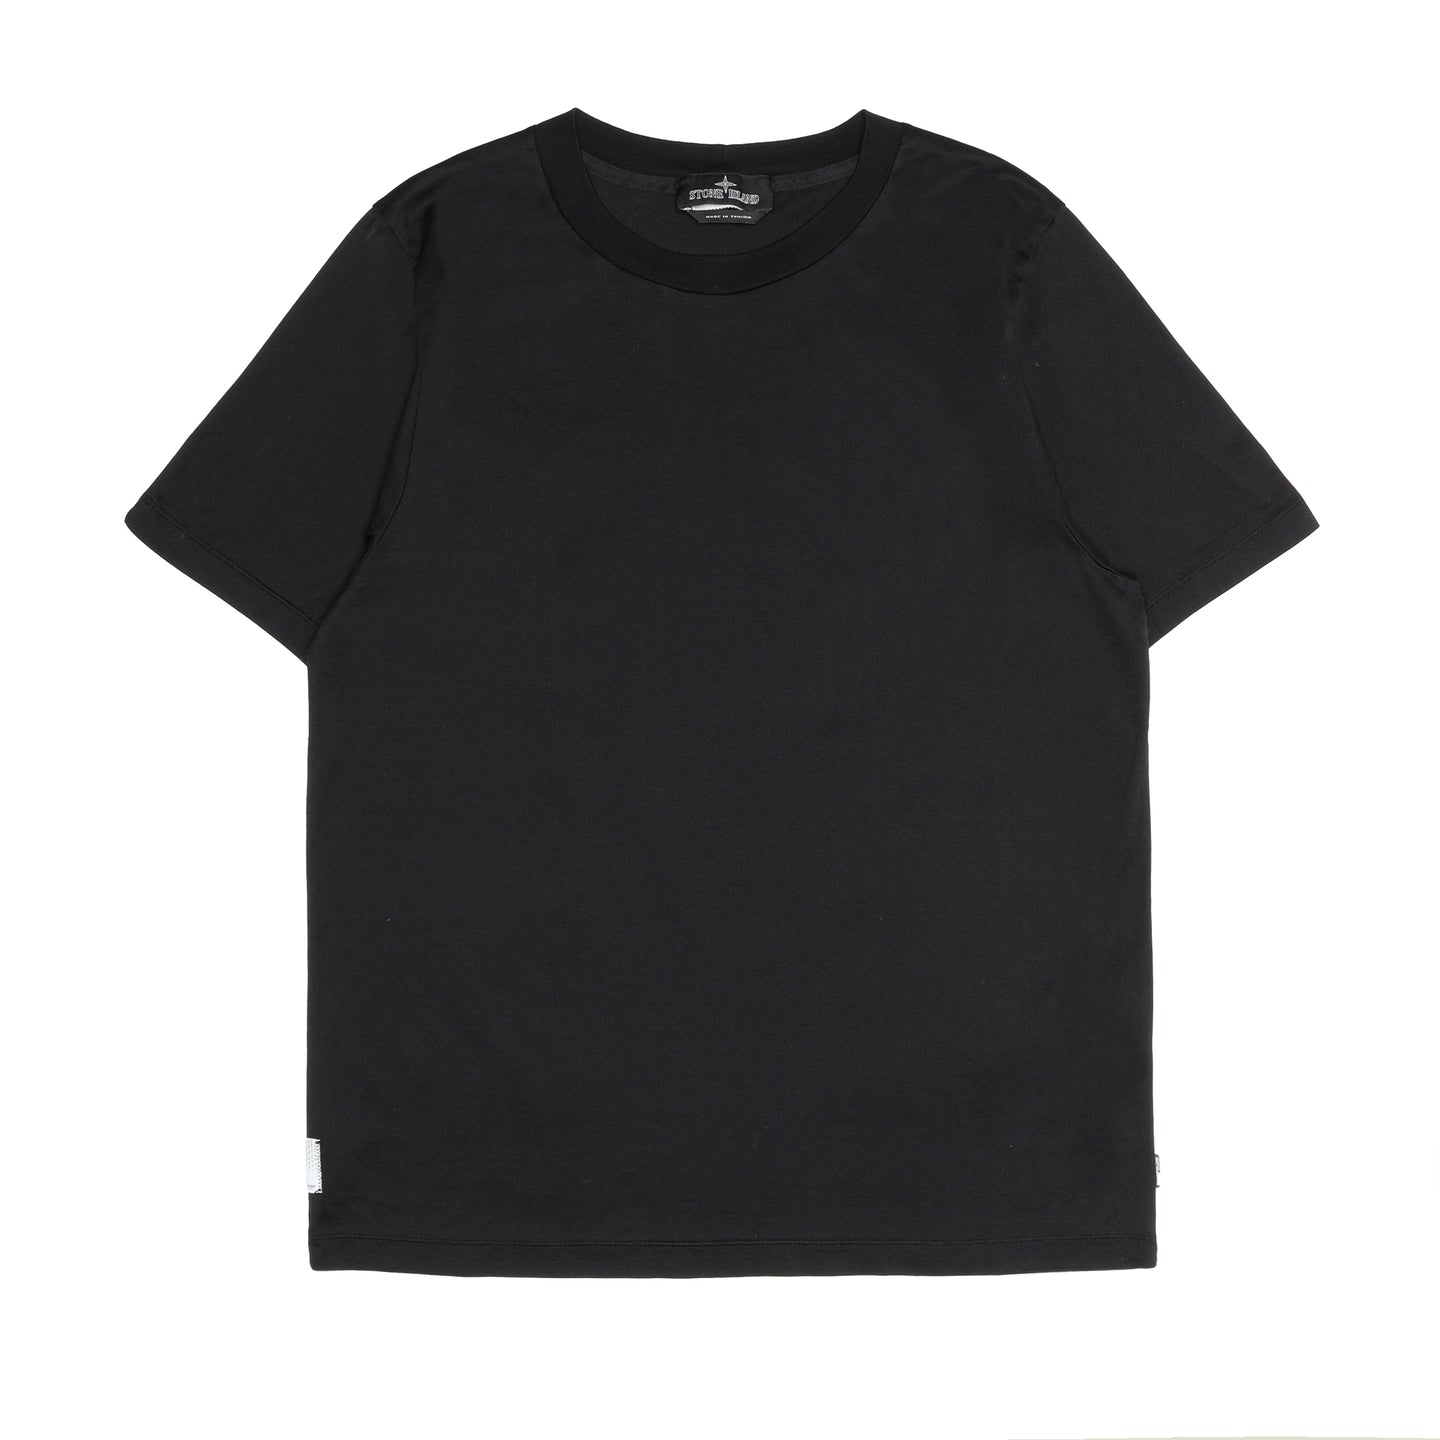 Stone Island Shadow Project Cotton Jersey SS T-Shirt Black